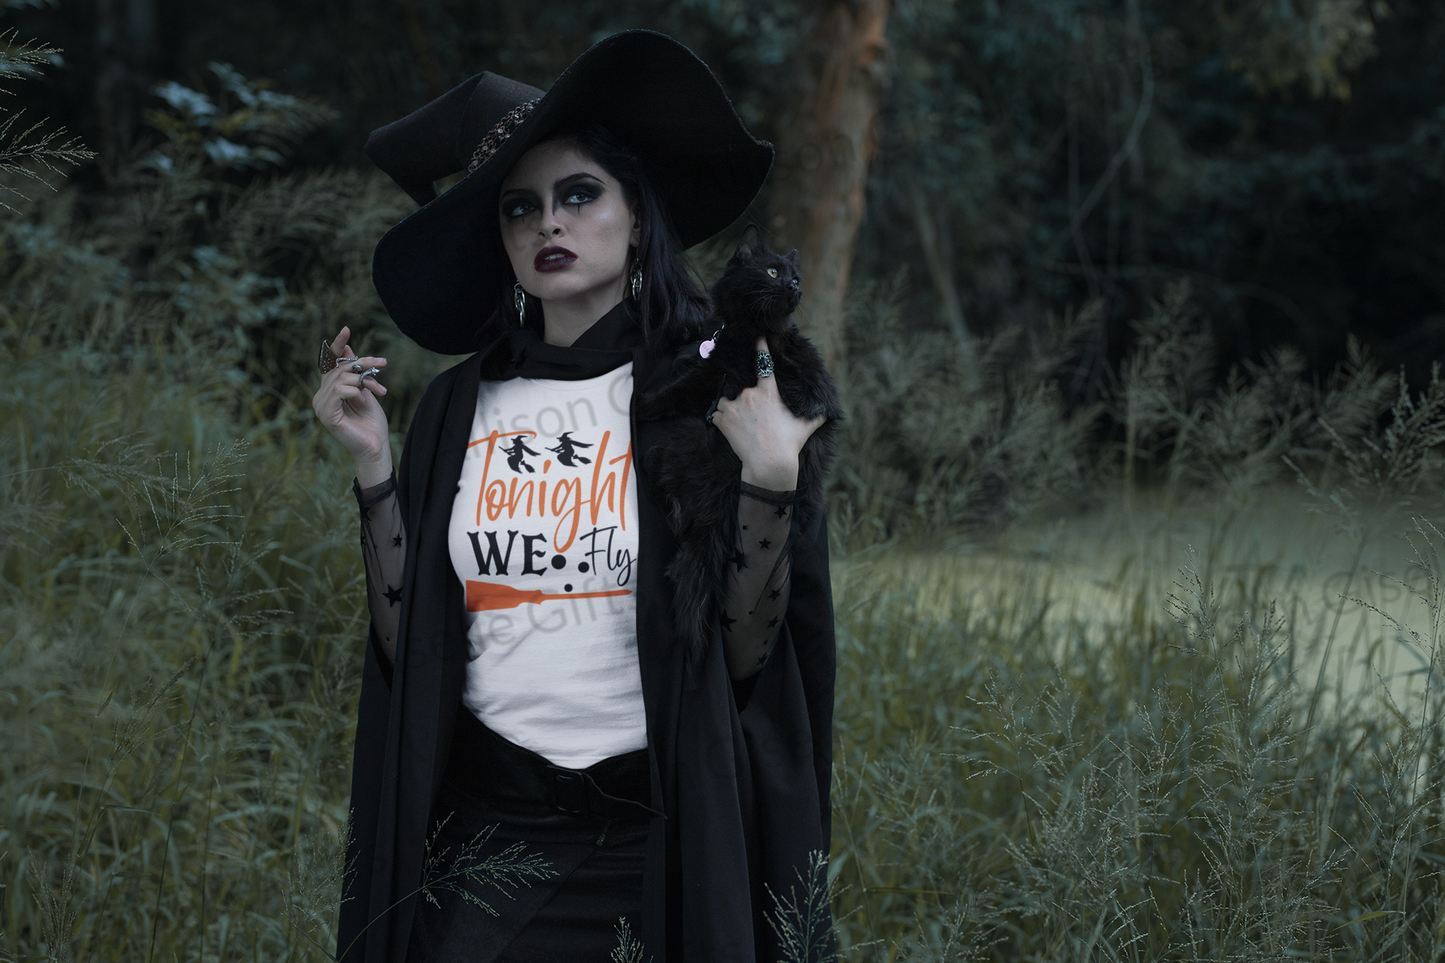 Tonight We Fly Shirt, Halloween Shirt, Witch Shirt, Halloween Costume